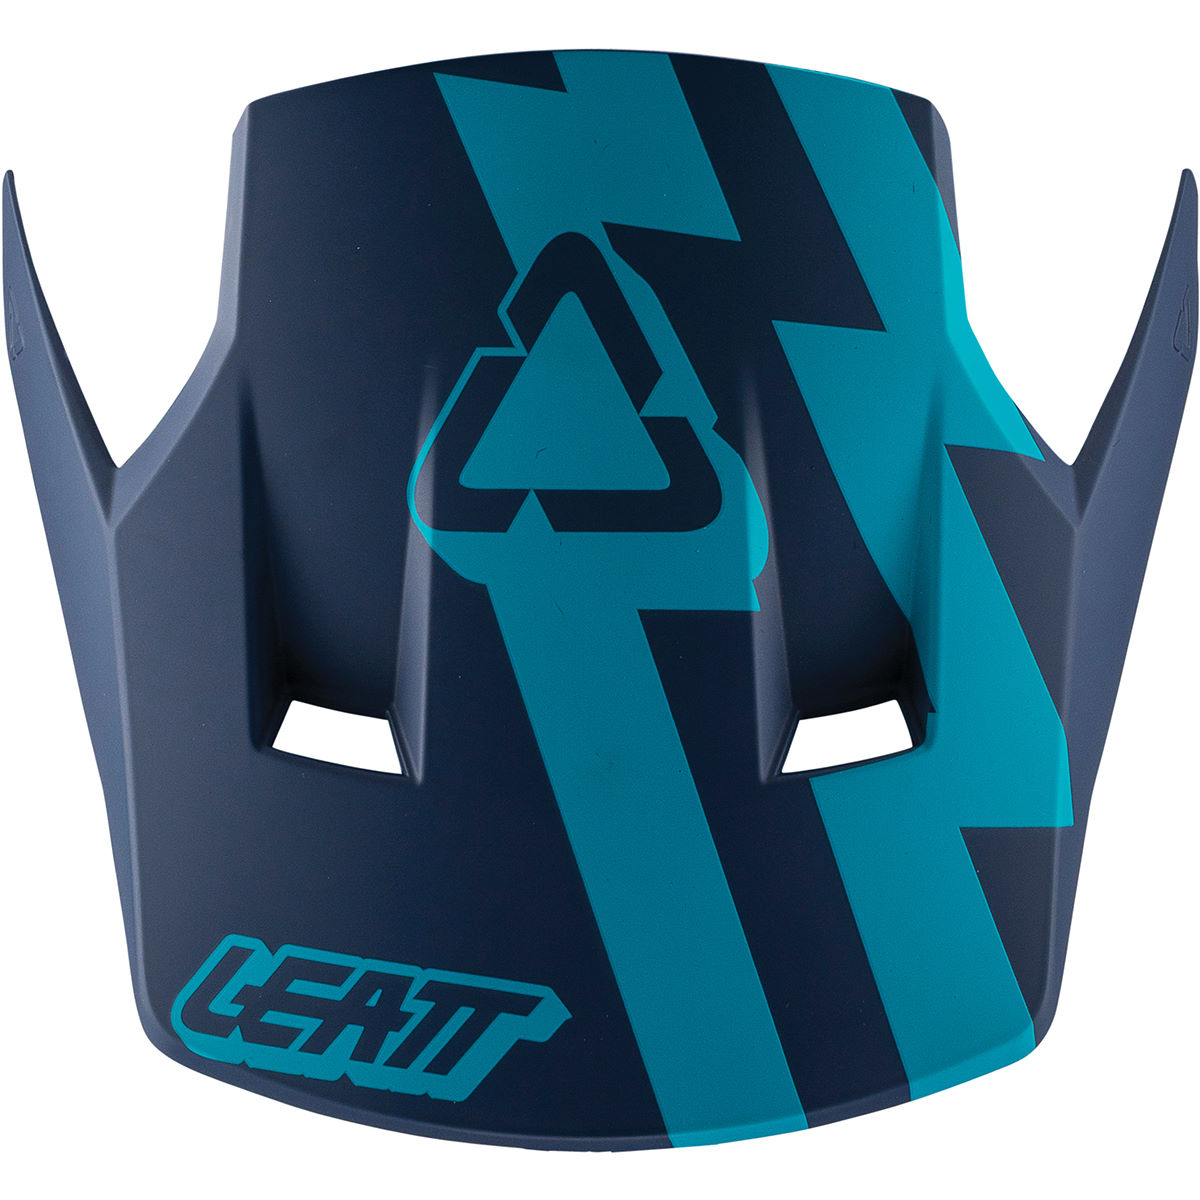 Visera de repuesto para casco Leatt DBX 3.0 - Recambios para cascos